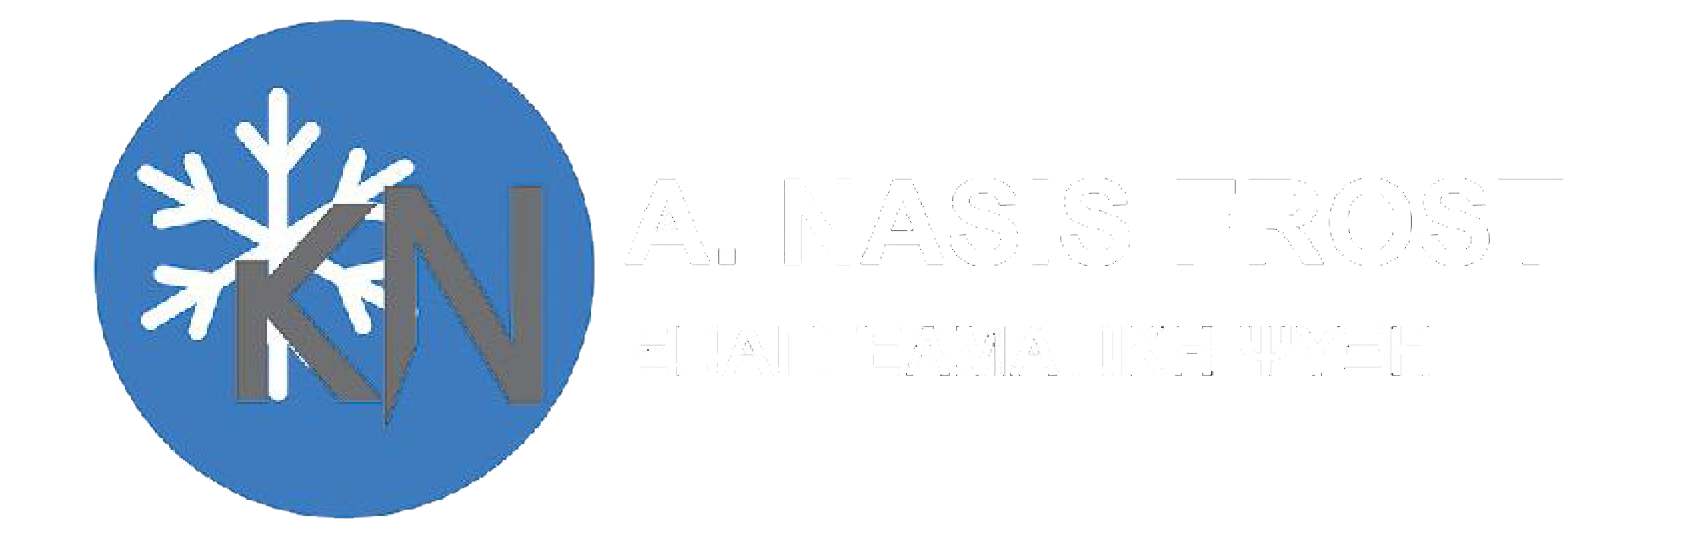 Nasis Frost | No 1 στην επαγγελματική ψύξη